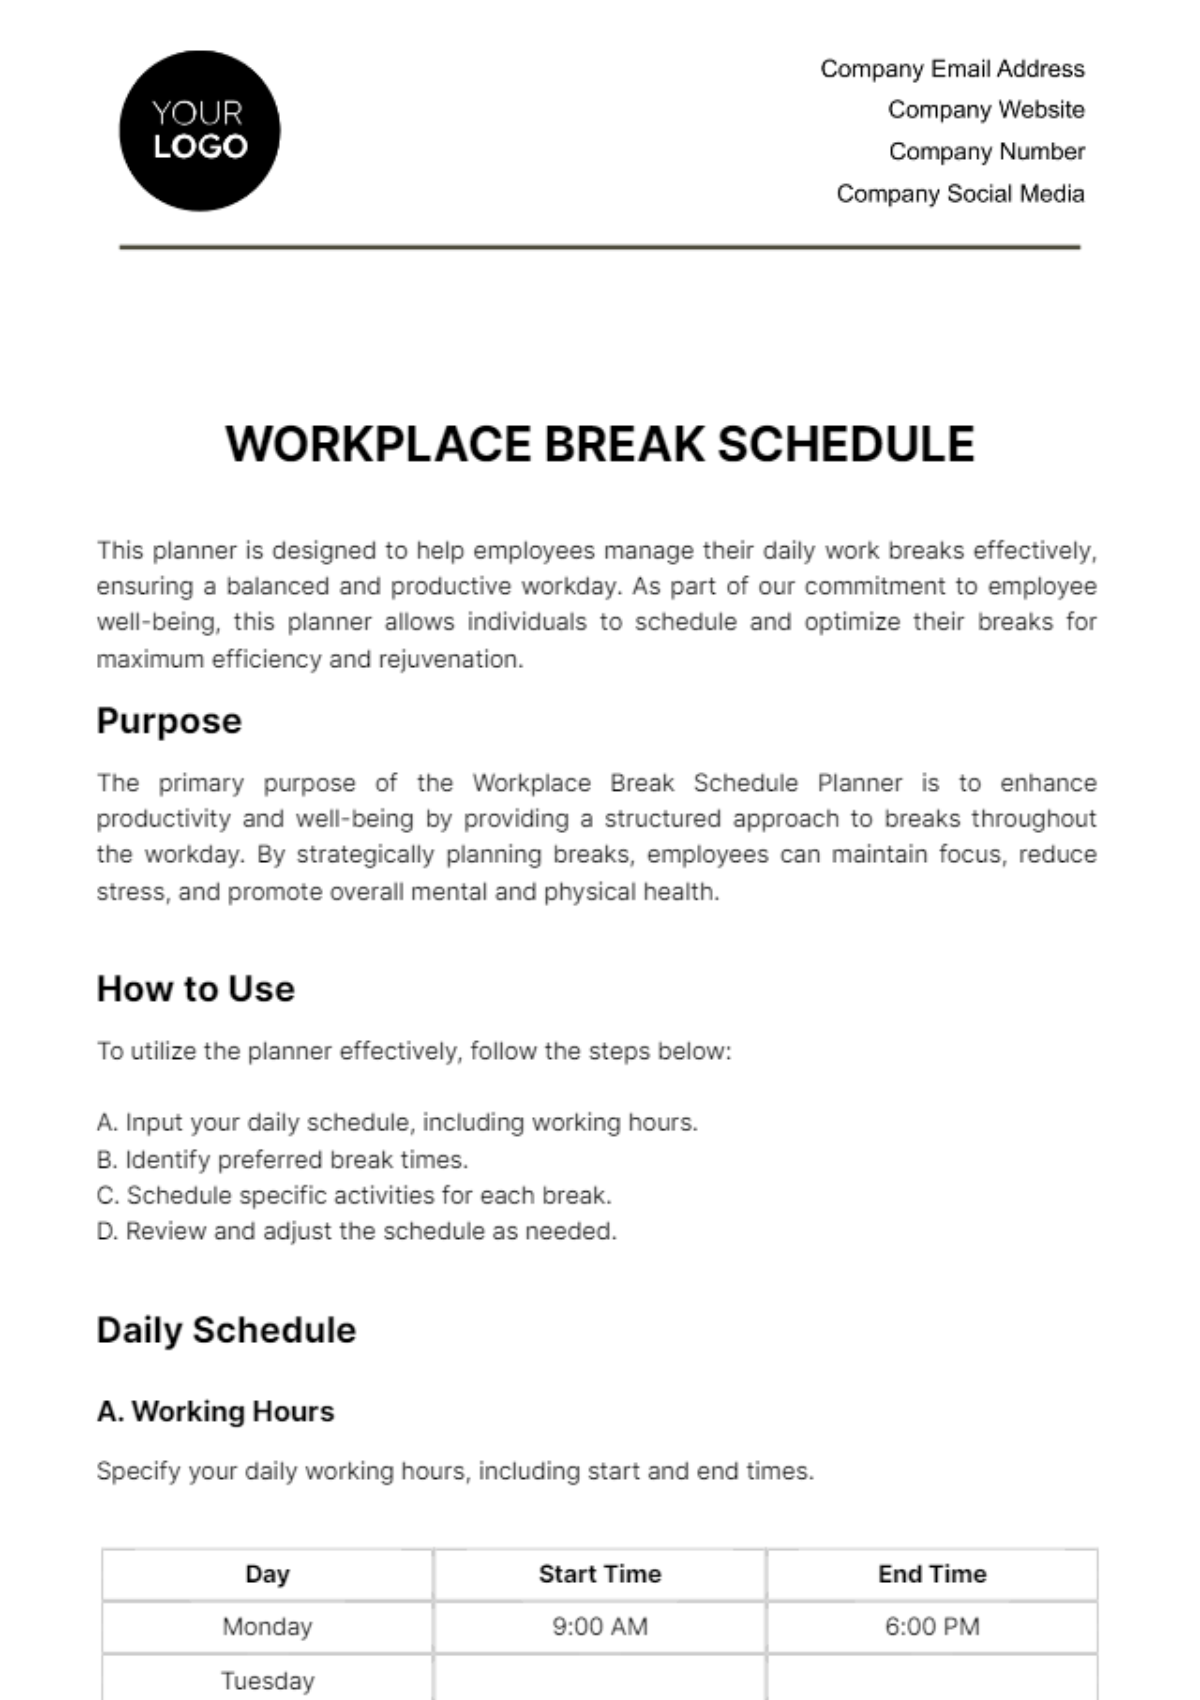 Free Workplace Break Schedule Template